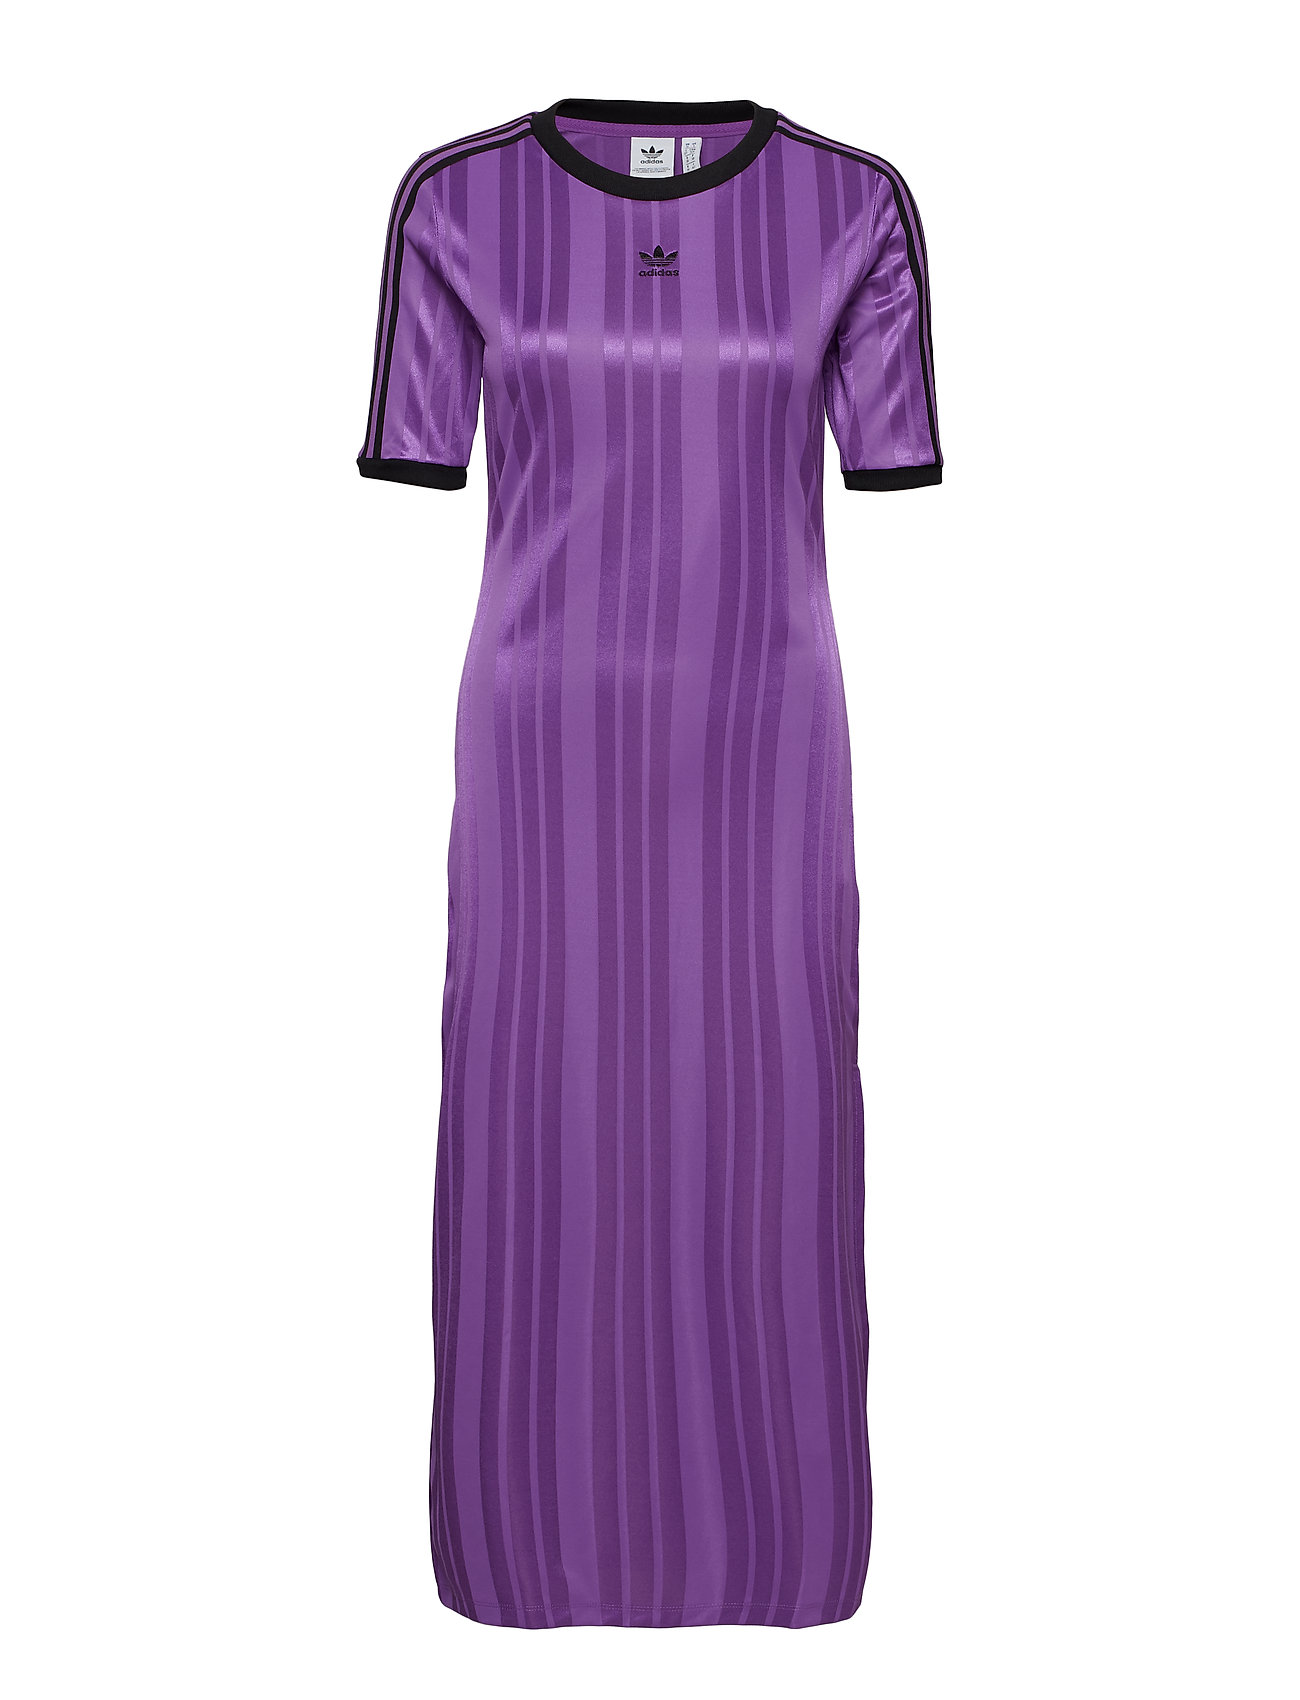 adidas purple dress